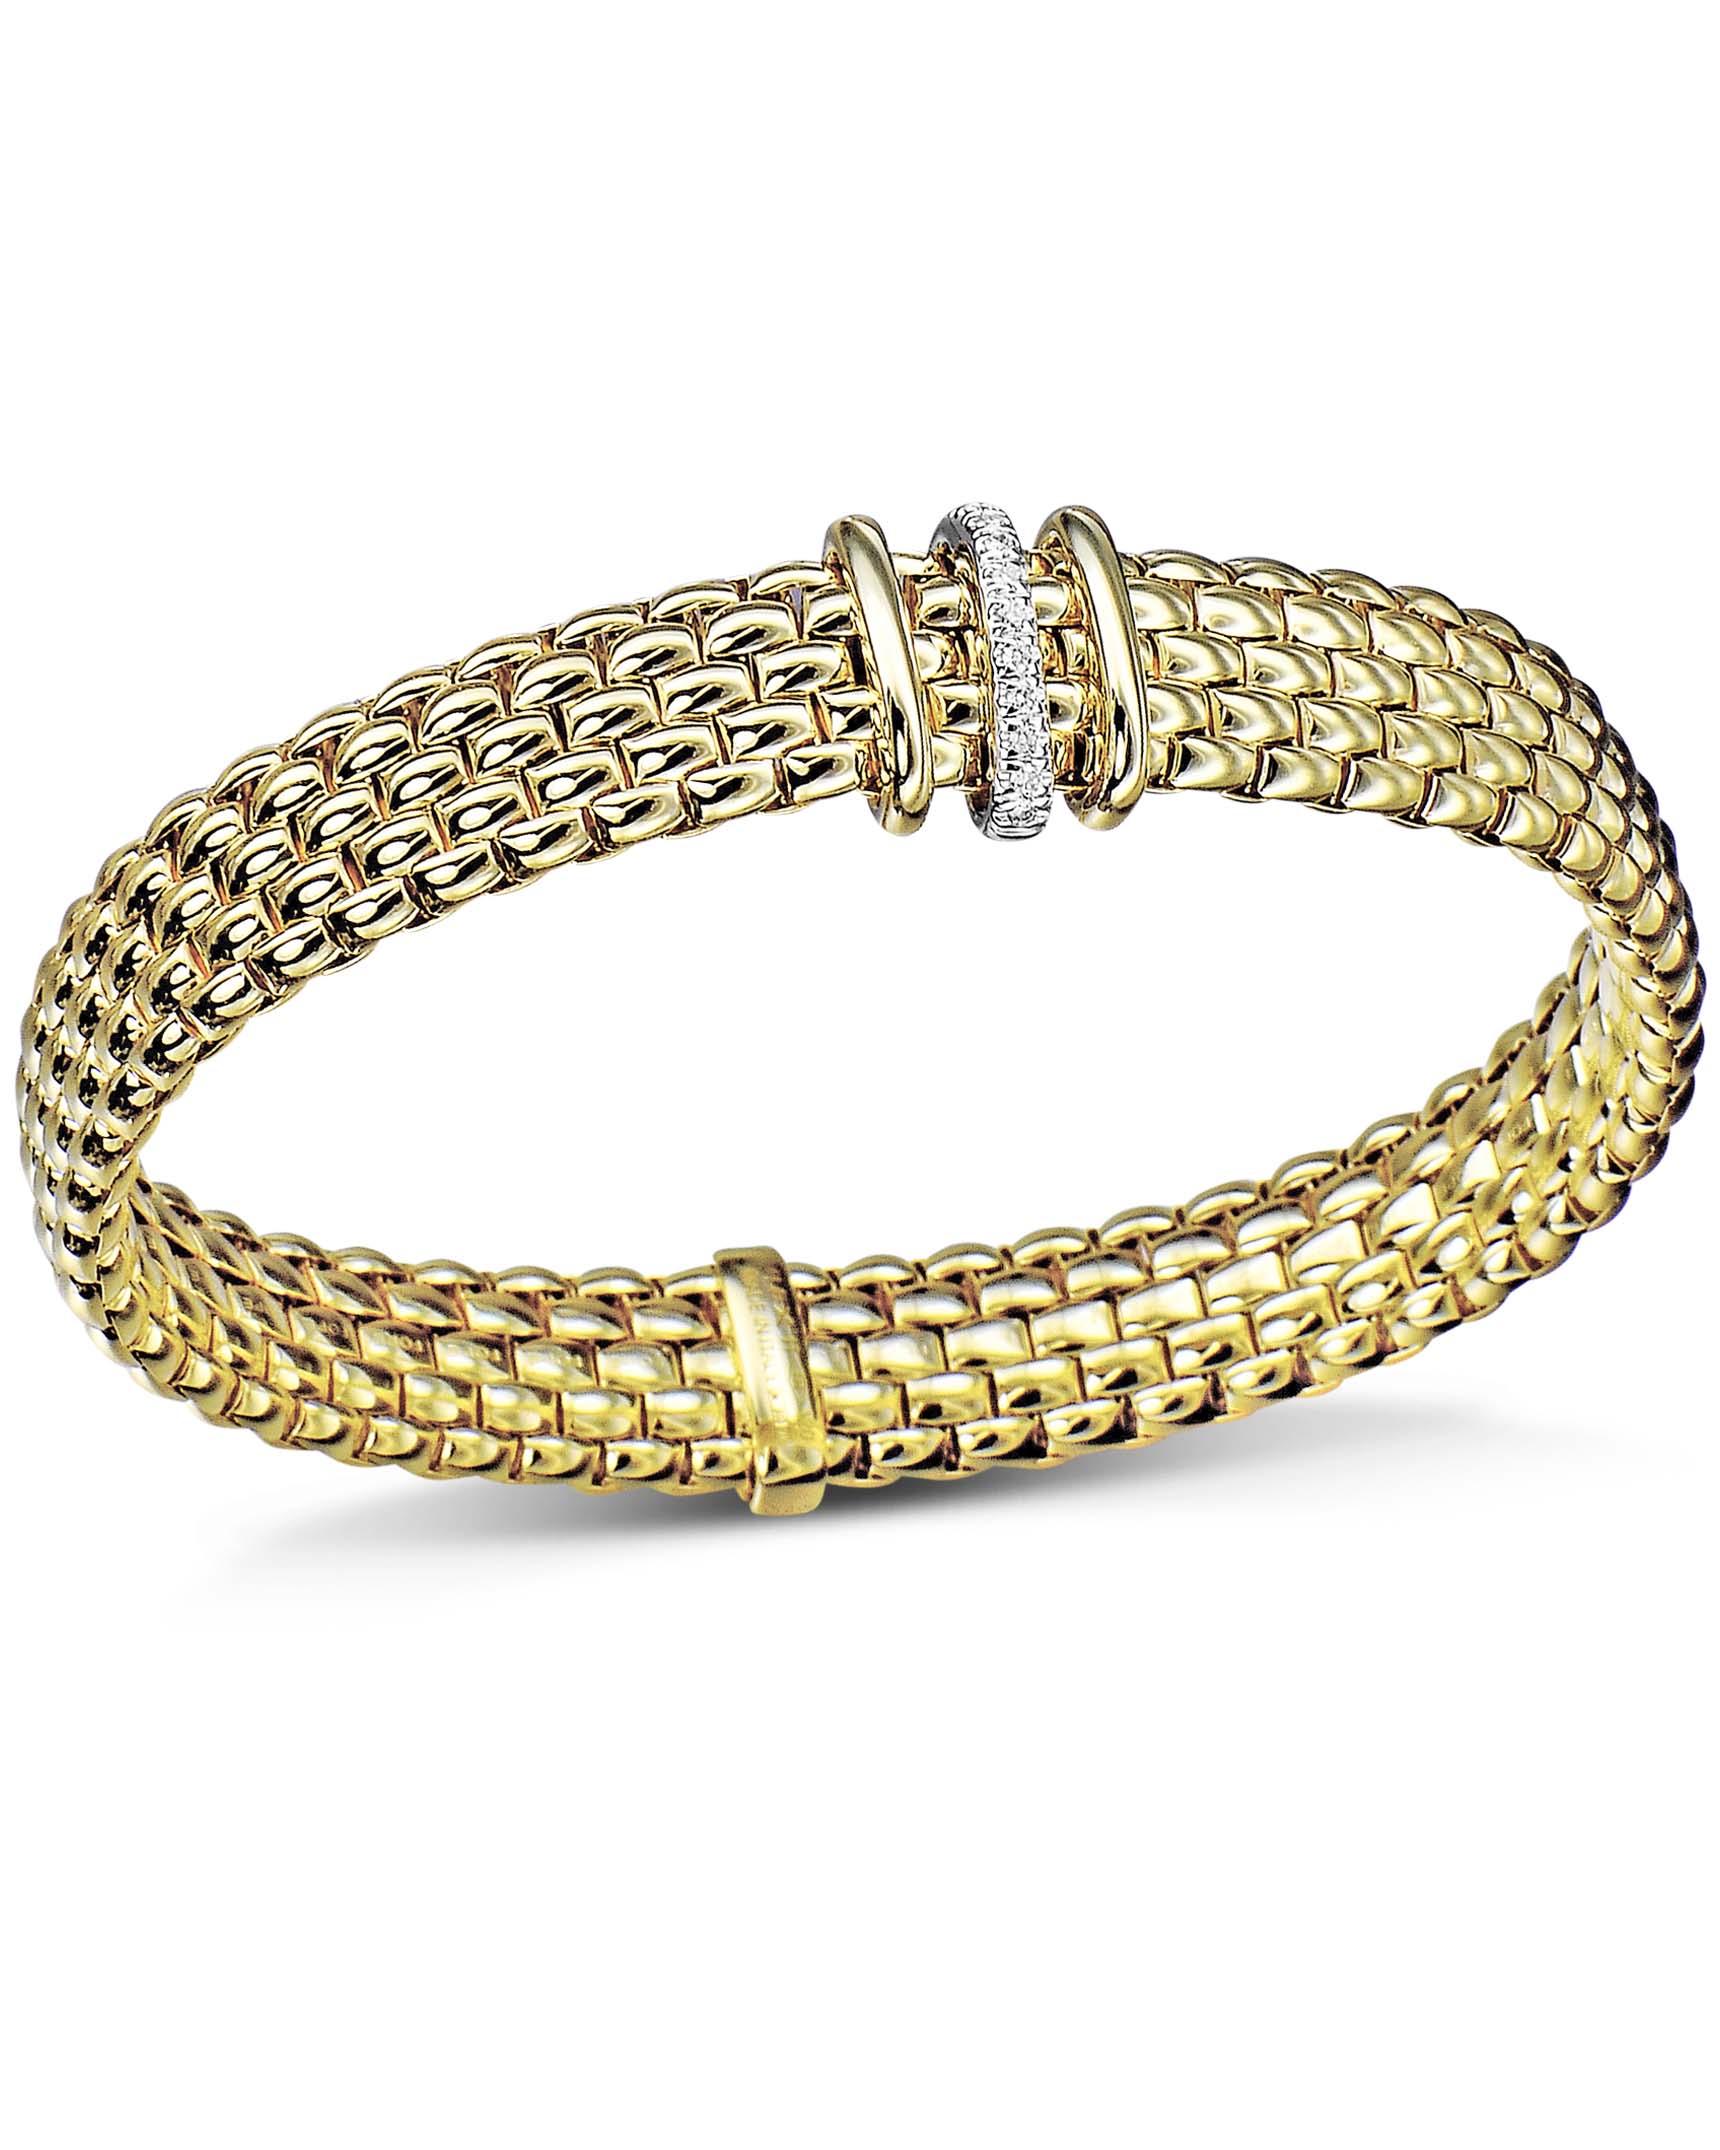 Sold at Auction: Fope - A silver and gem set bracelet